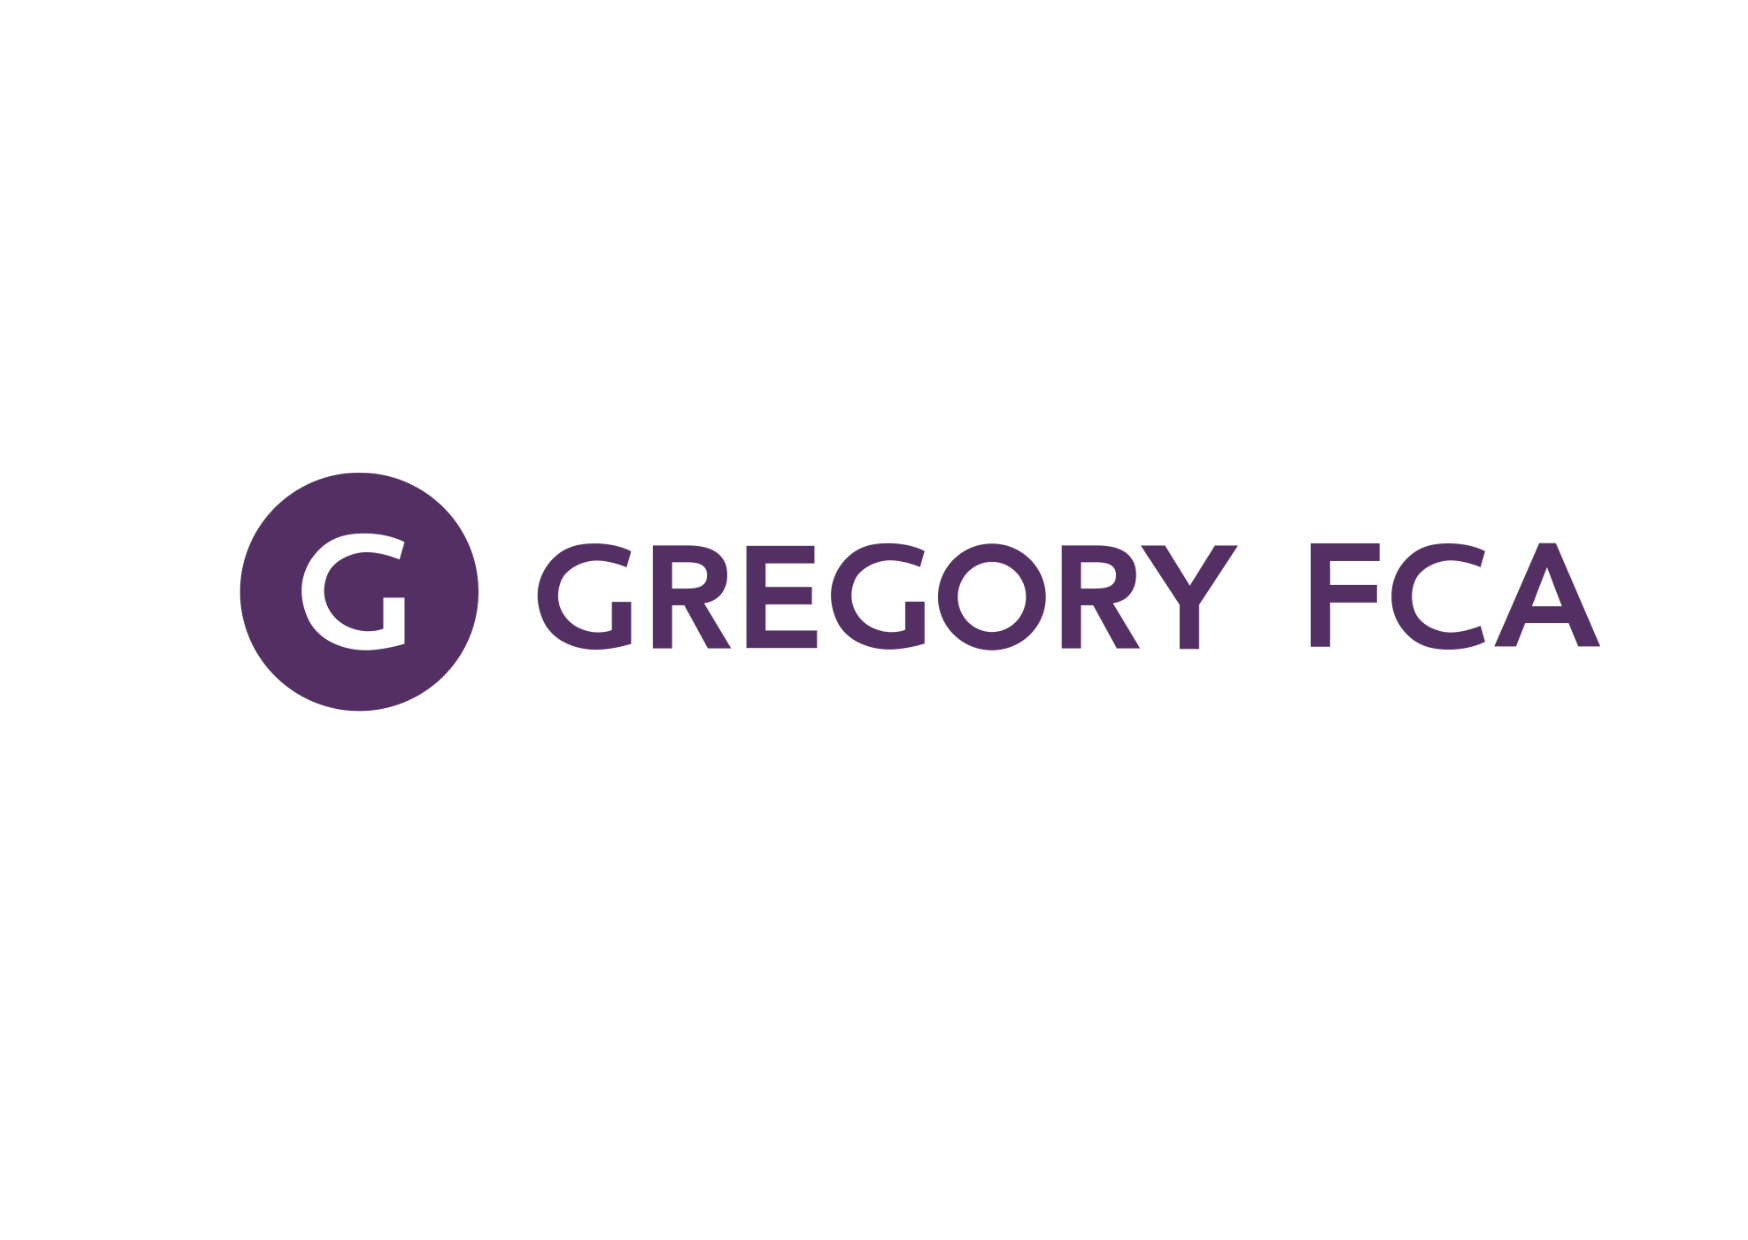 Gregory FCA